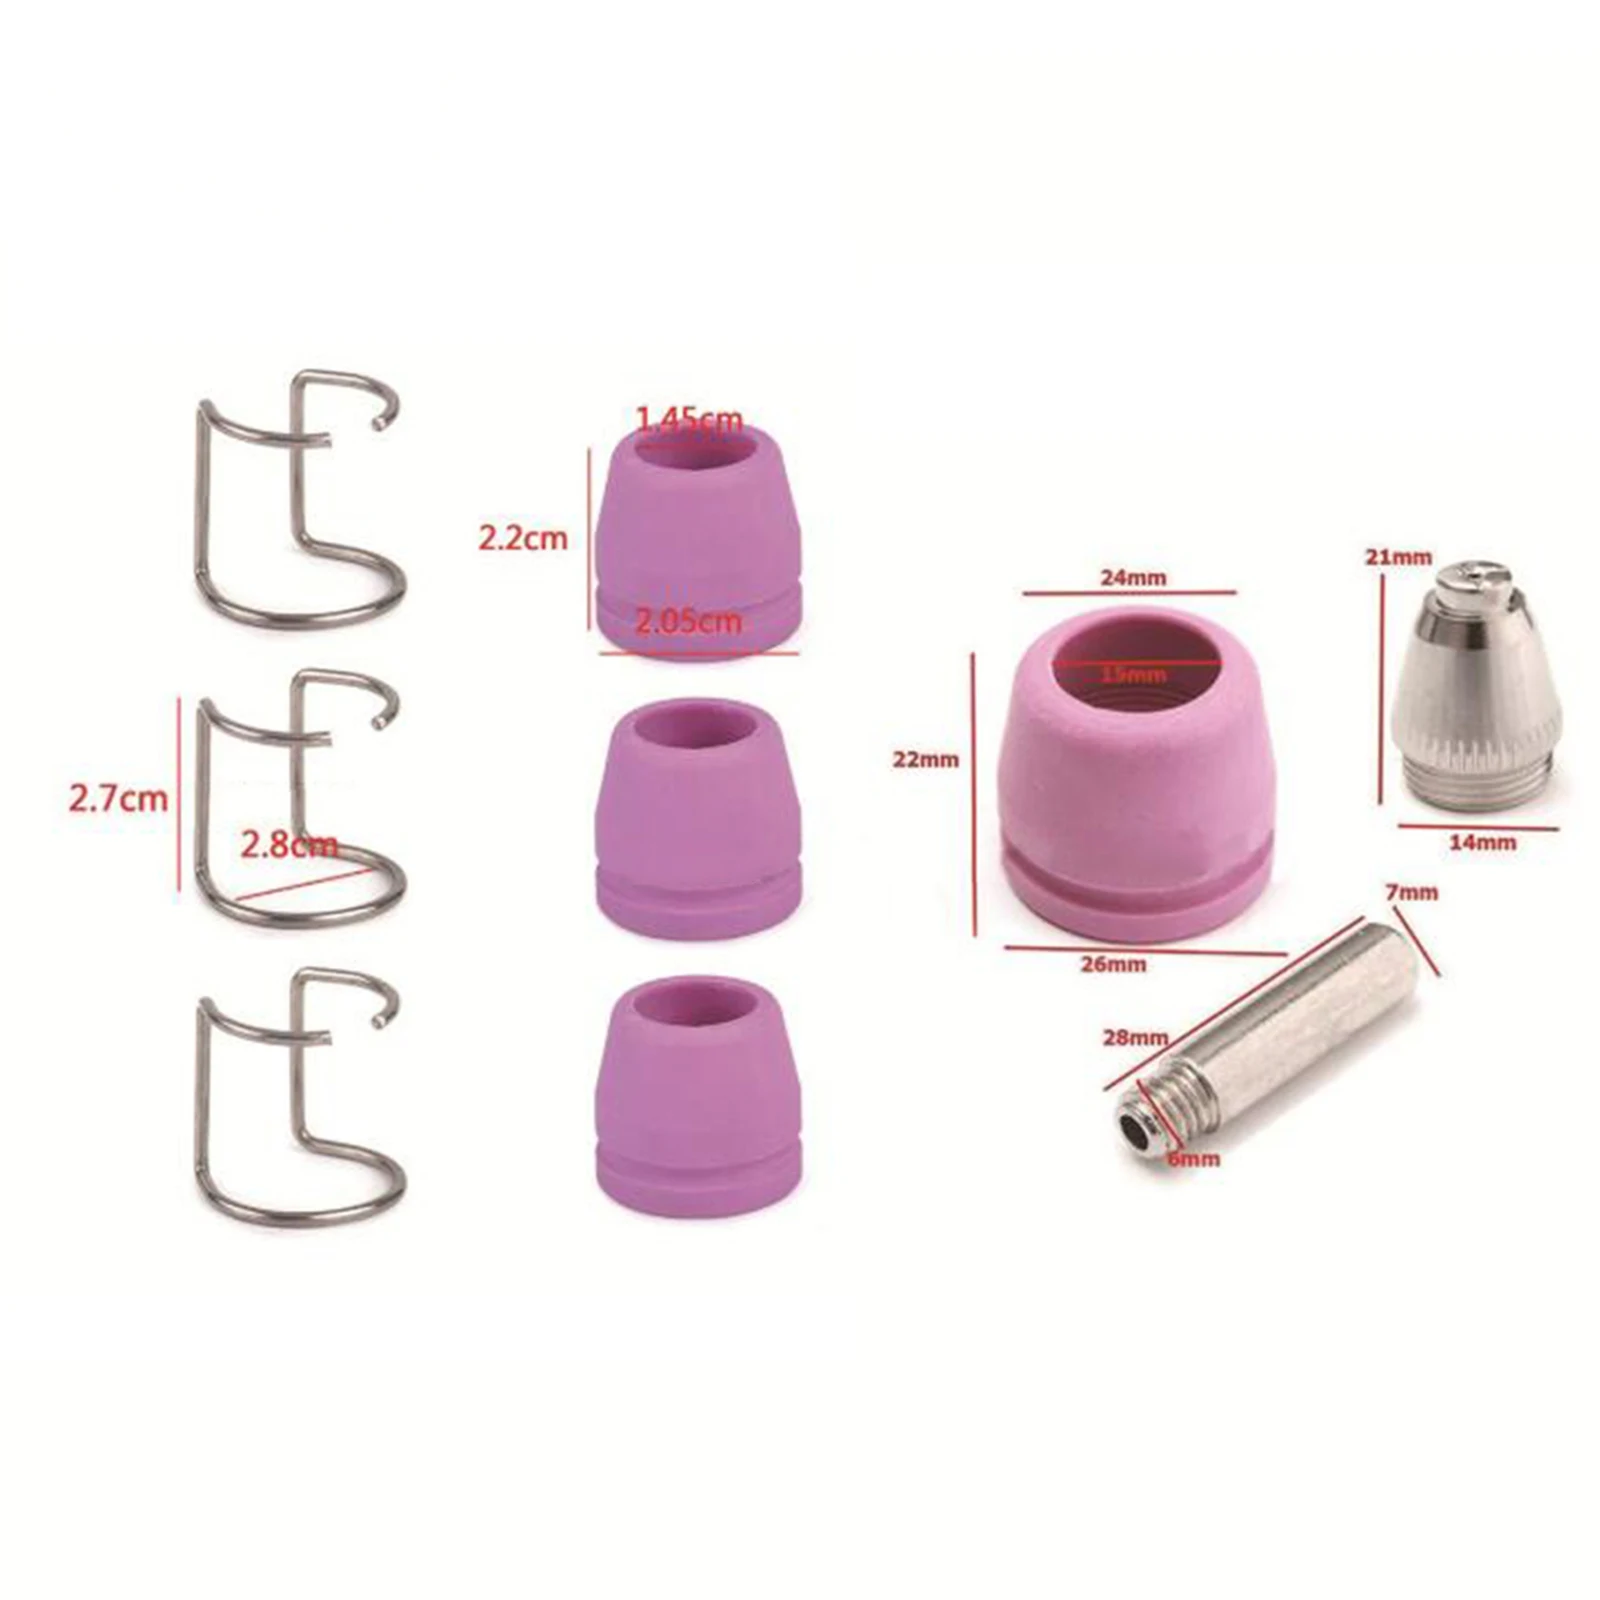 26-pack Plasma Cutter Torch Electrode Tips Kit fits for Ag-60 SG-55, suitable for DIY Work